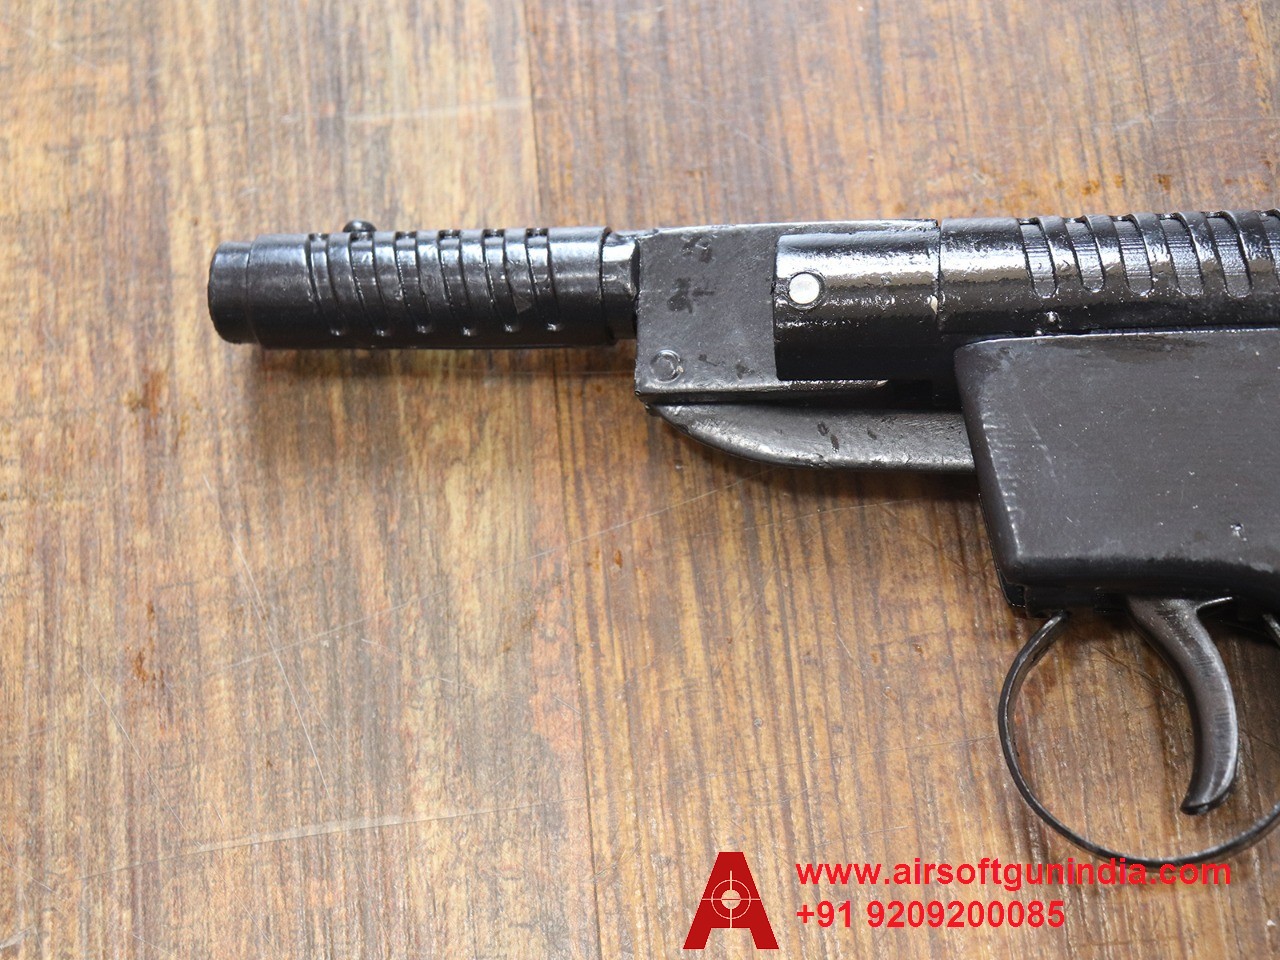 Batman Cobra Single-Shot .177 Caliber / 4.5 Mm Indian Air Pistol By Airsoft Gun India